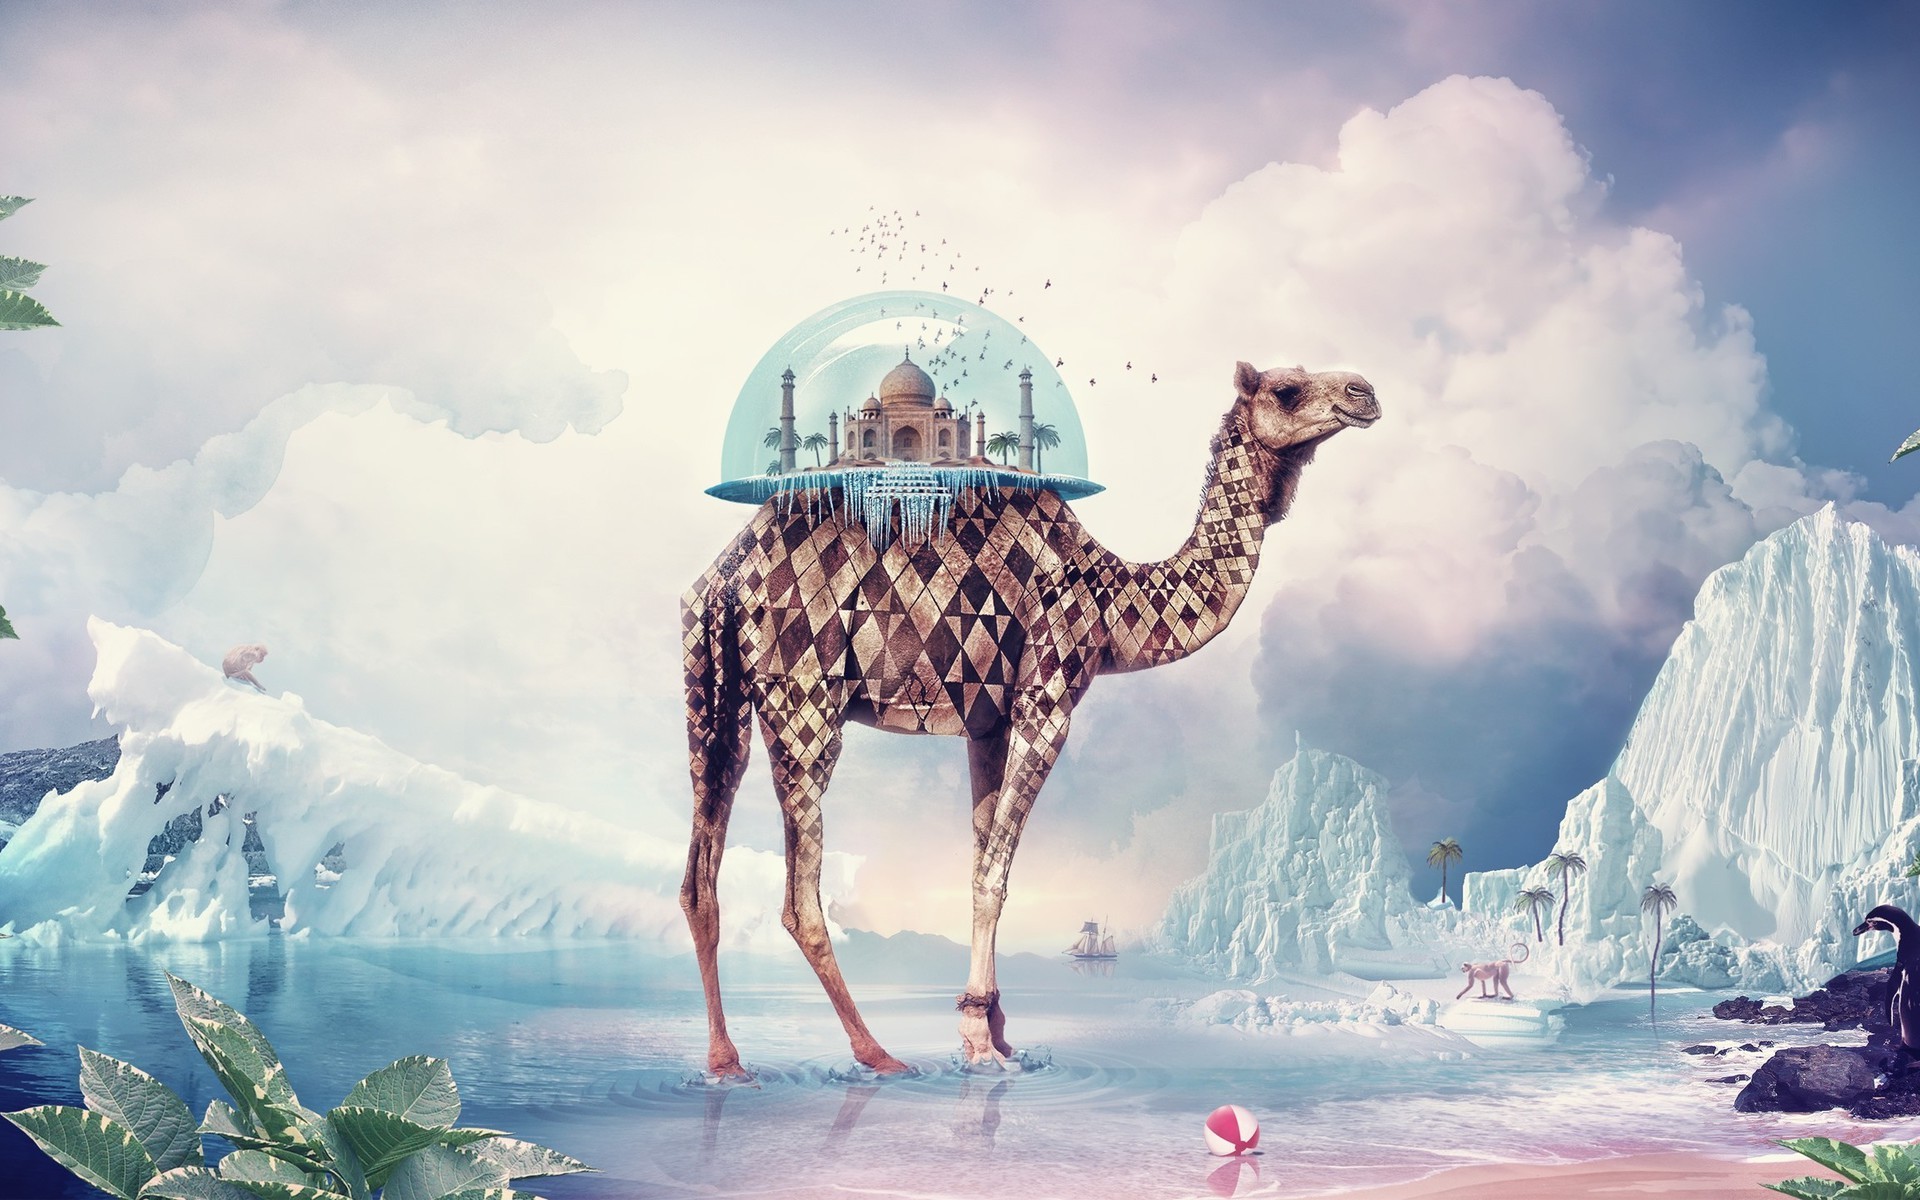 animals, Digital Art, Camels, Artwork, Surreal, Taj Mahal, Birds, Sphere, Iceberg, Clouds, Leaves, Palm Trees, Sailing Ships, Monkeys, Sea, Sand, Beach, Ball, Rock, Waves, Nature Wallpaper